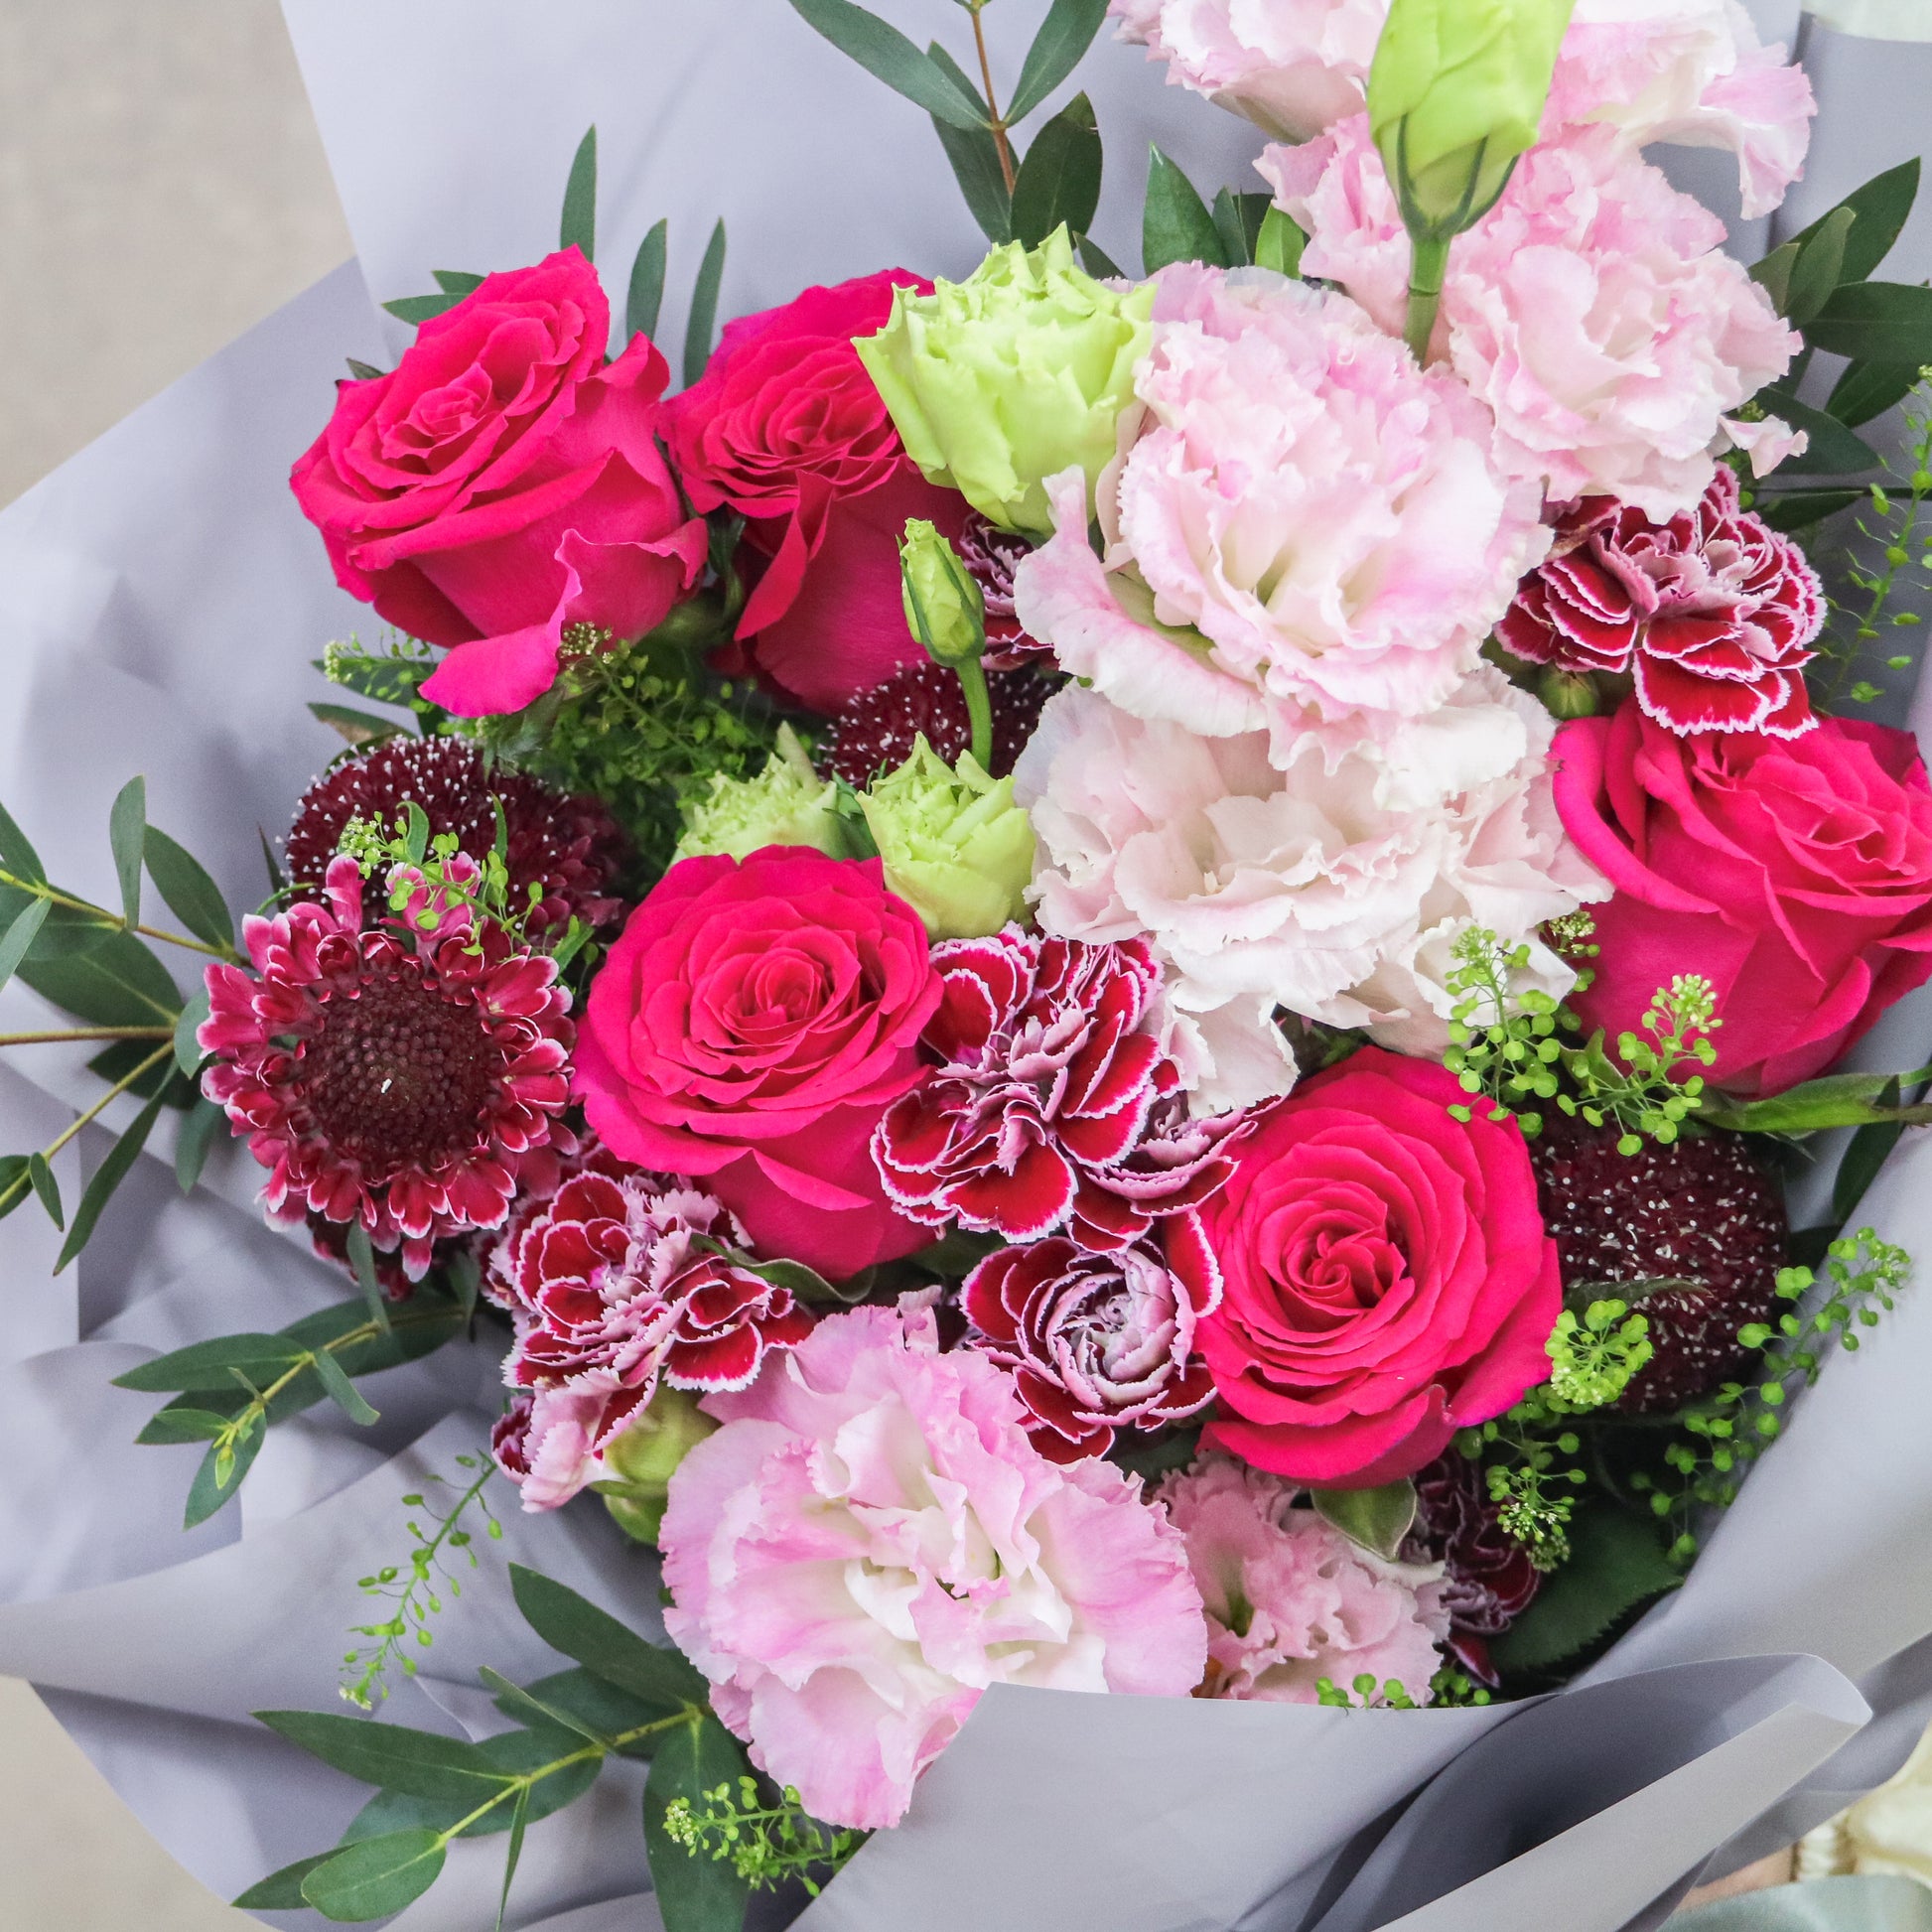 桃紅玫瑰粉桔梗花束 Magenta rose and pink eustoma bouquet